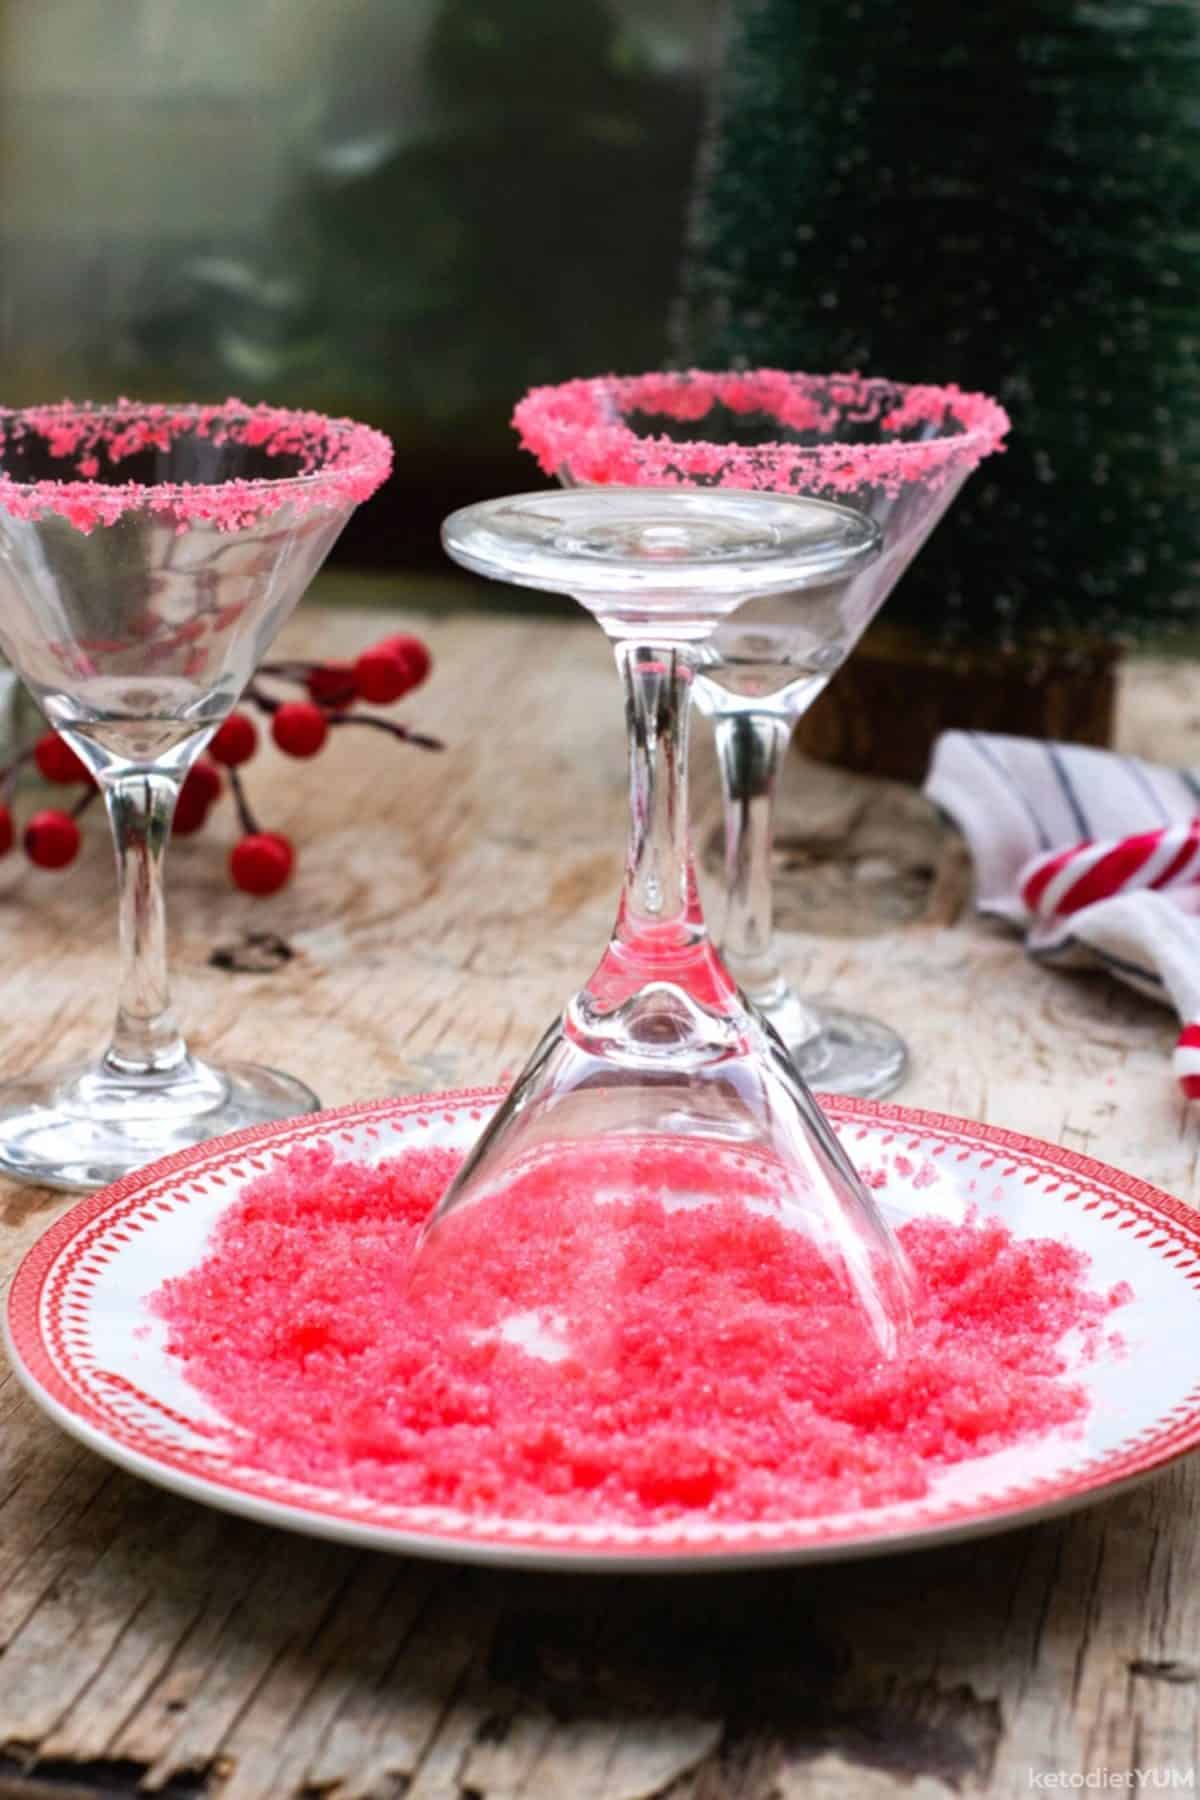 Festive red Erythritol granules used to rim martini glasses